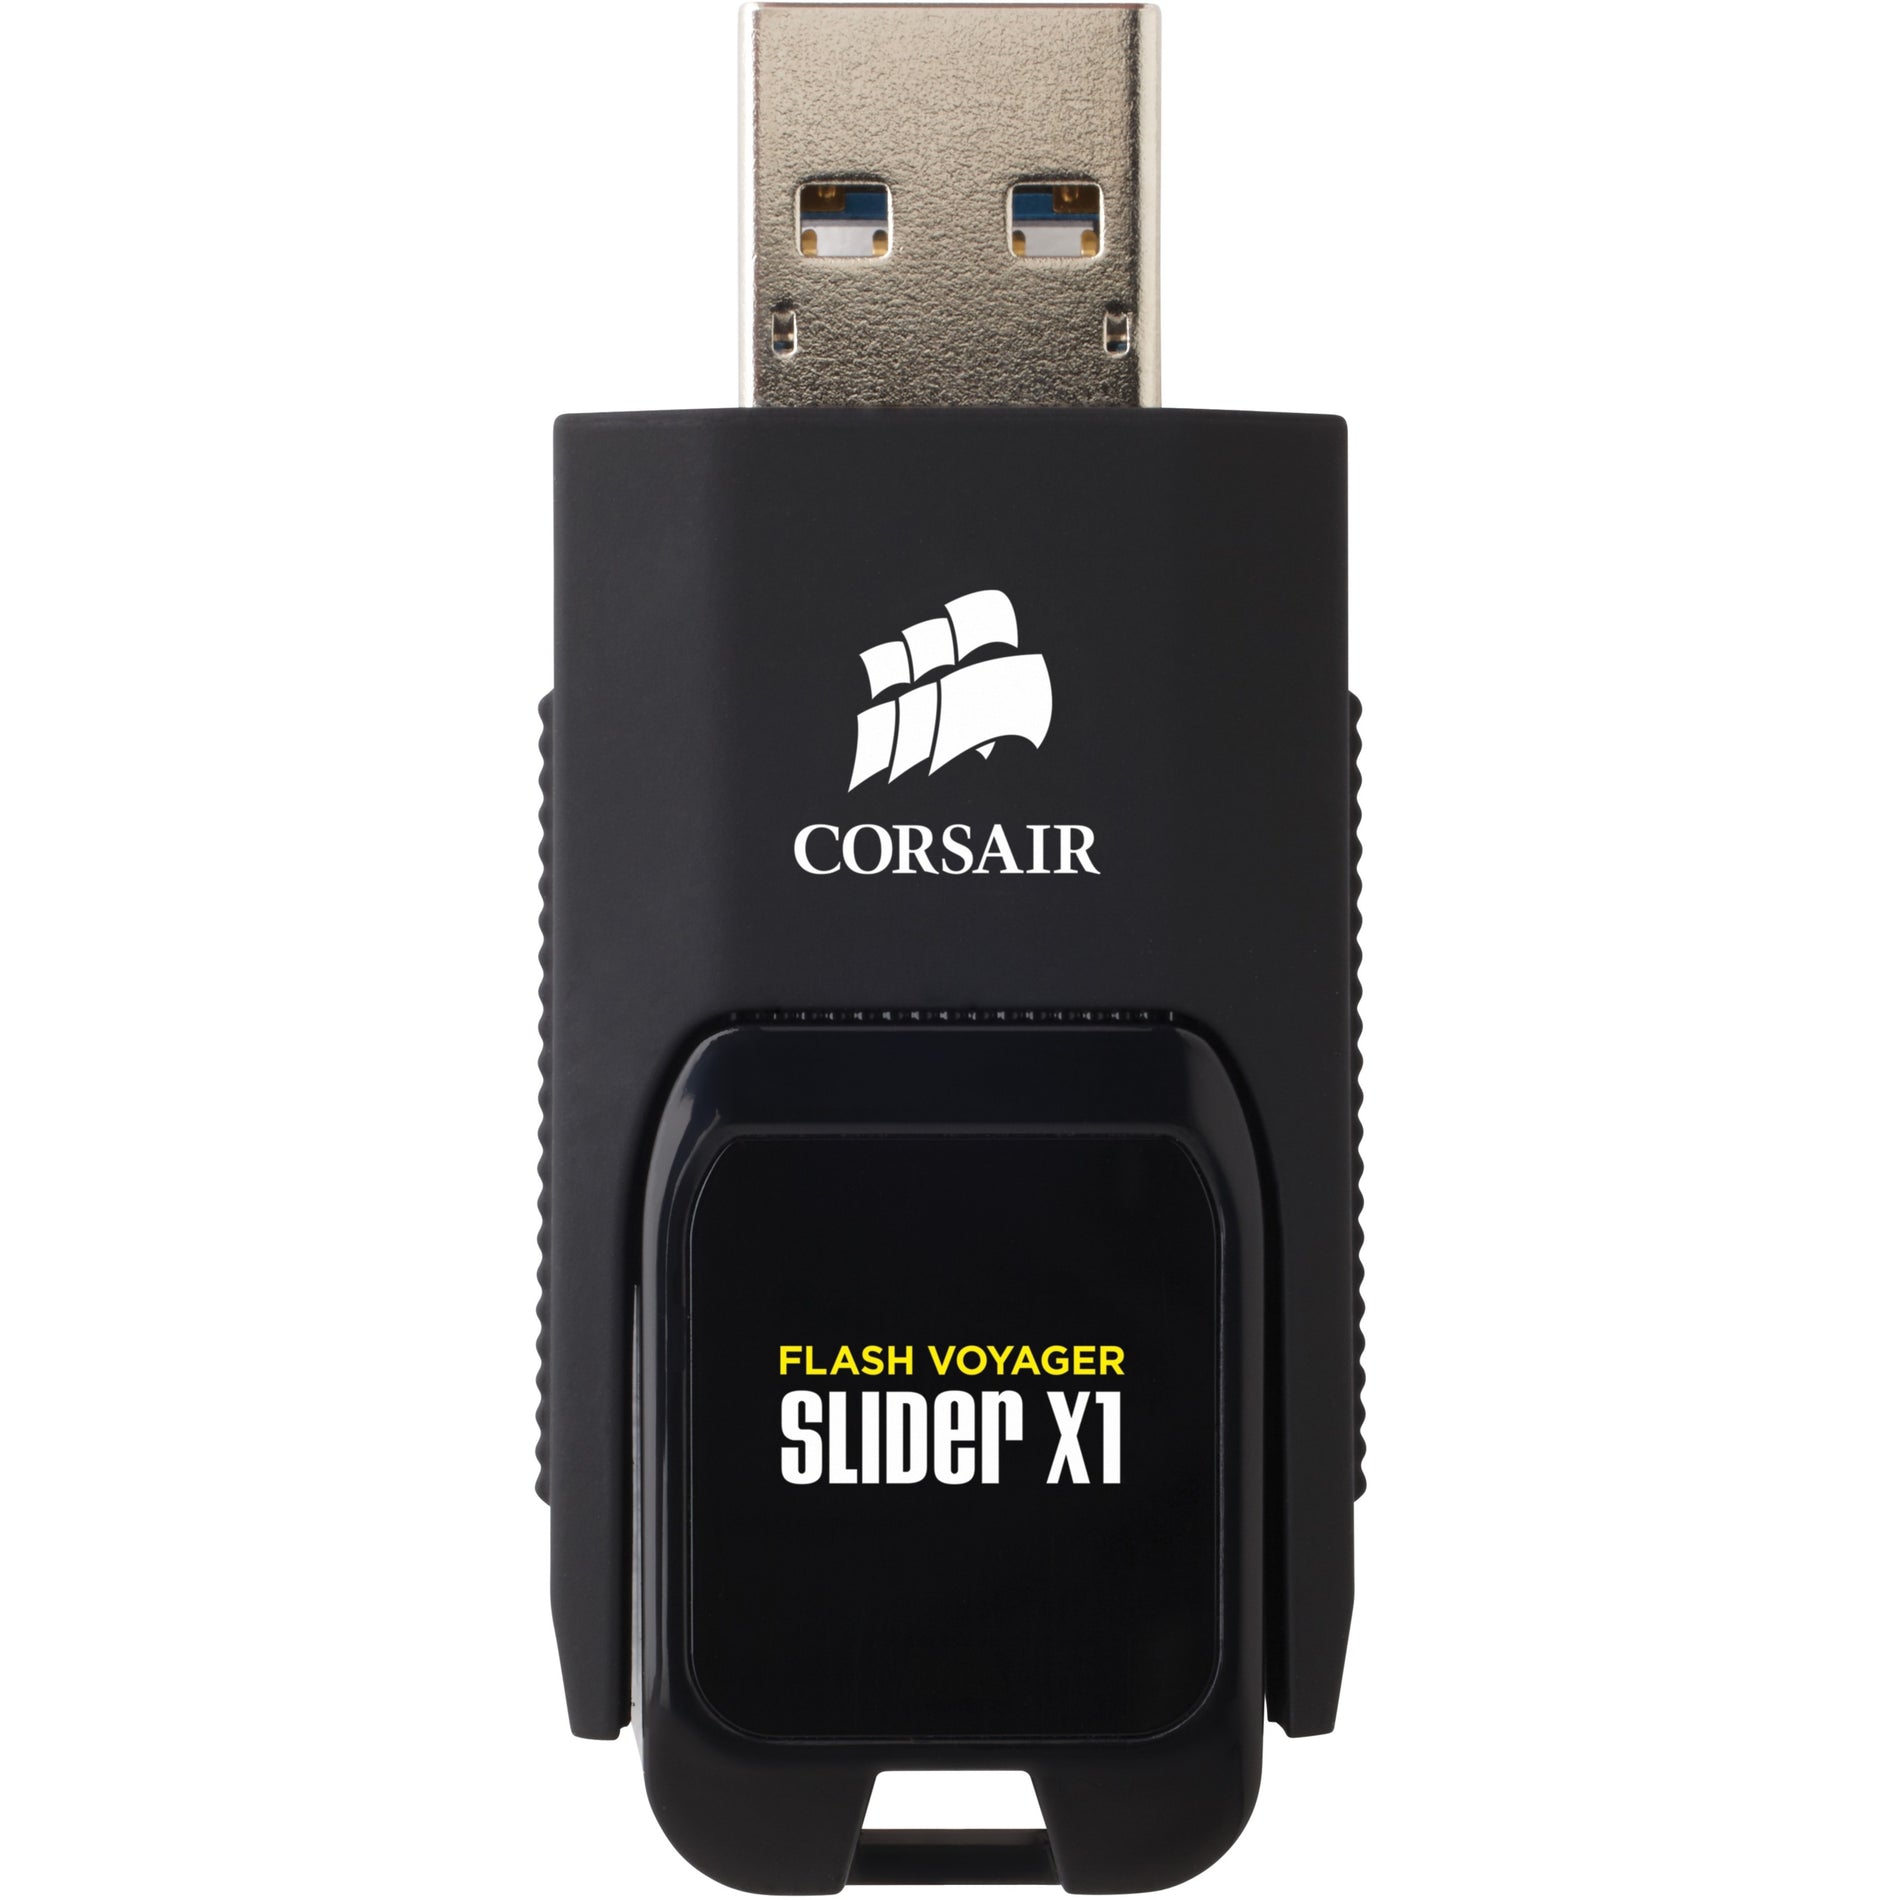 Corsair CMFSL3X1-128GB Flash Voyager Slider X1 128GB, USB 3.0 Flash Drive, Compact and Capless